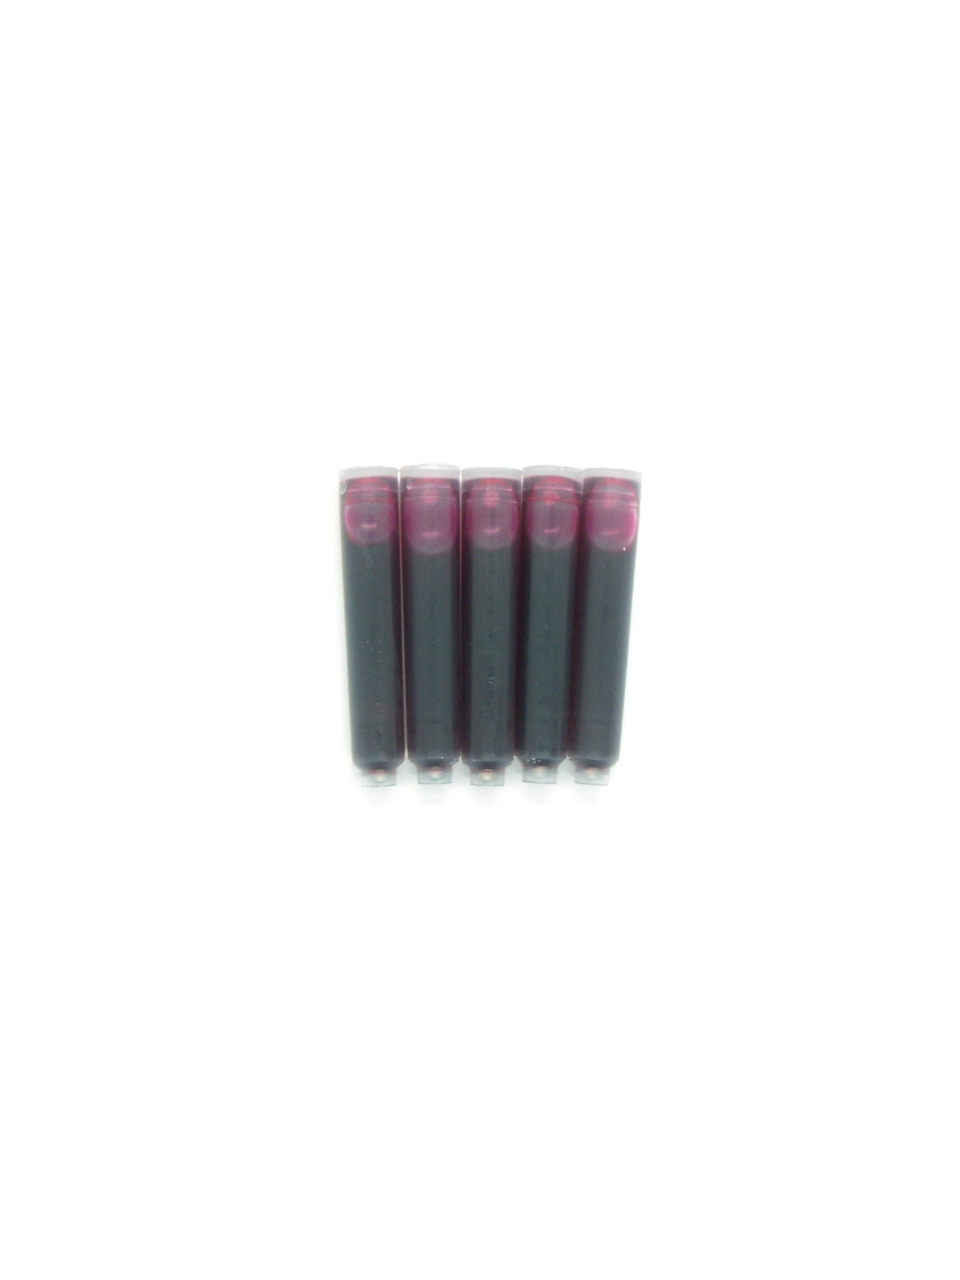 PenConverter Ink Cartridges For 3952 Fountain Pens (Pink)